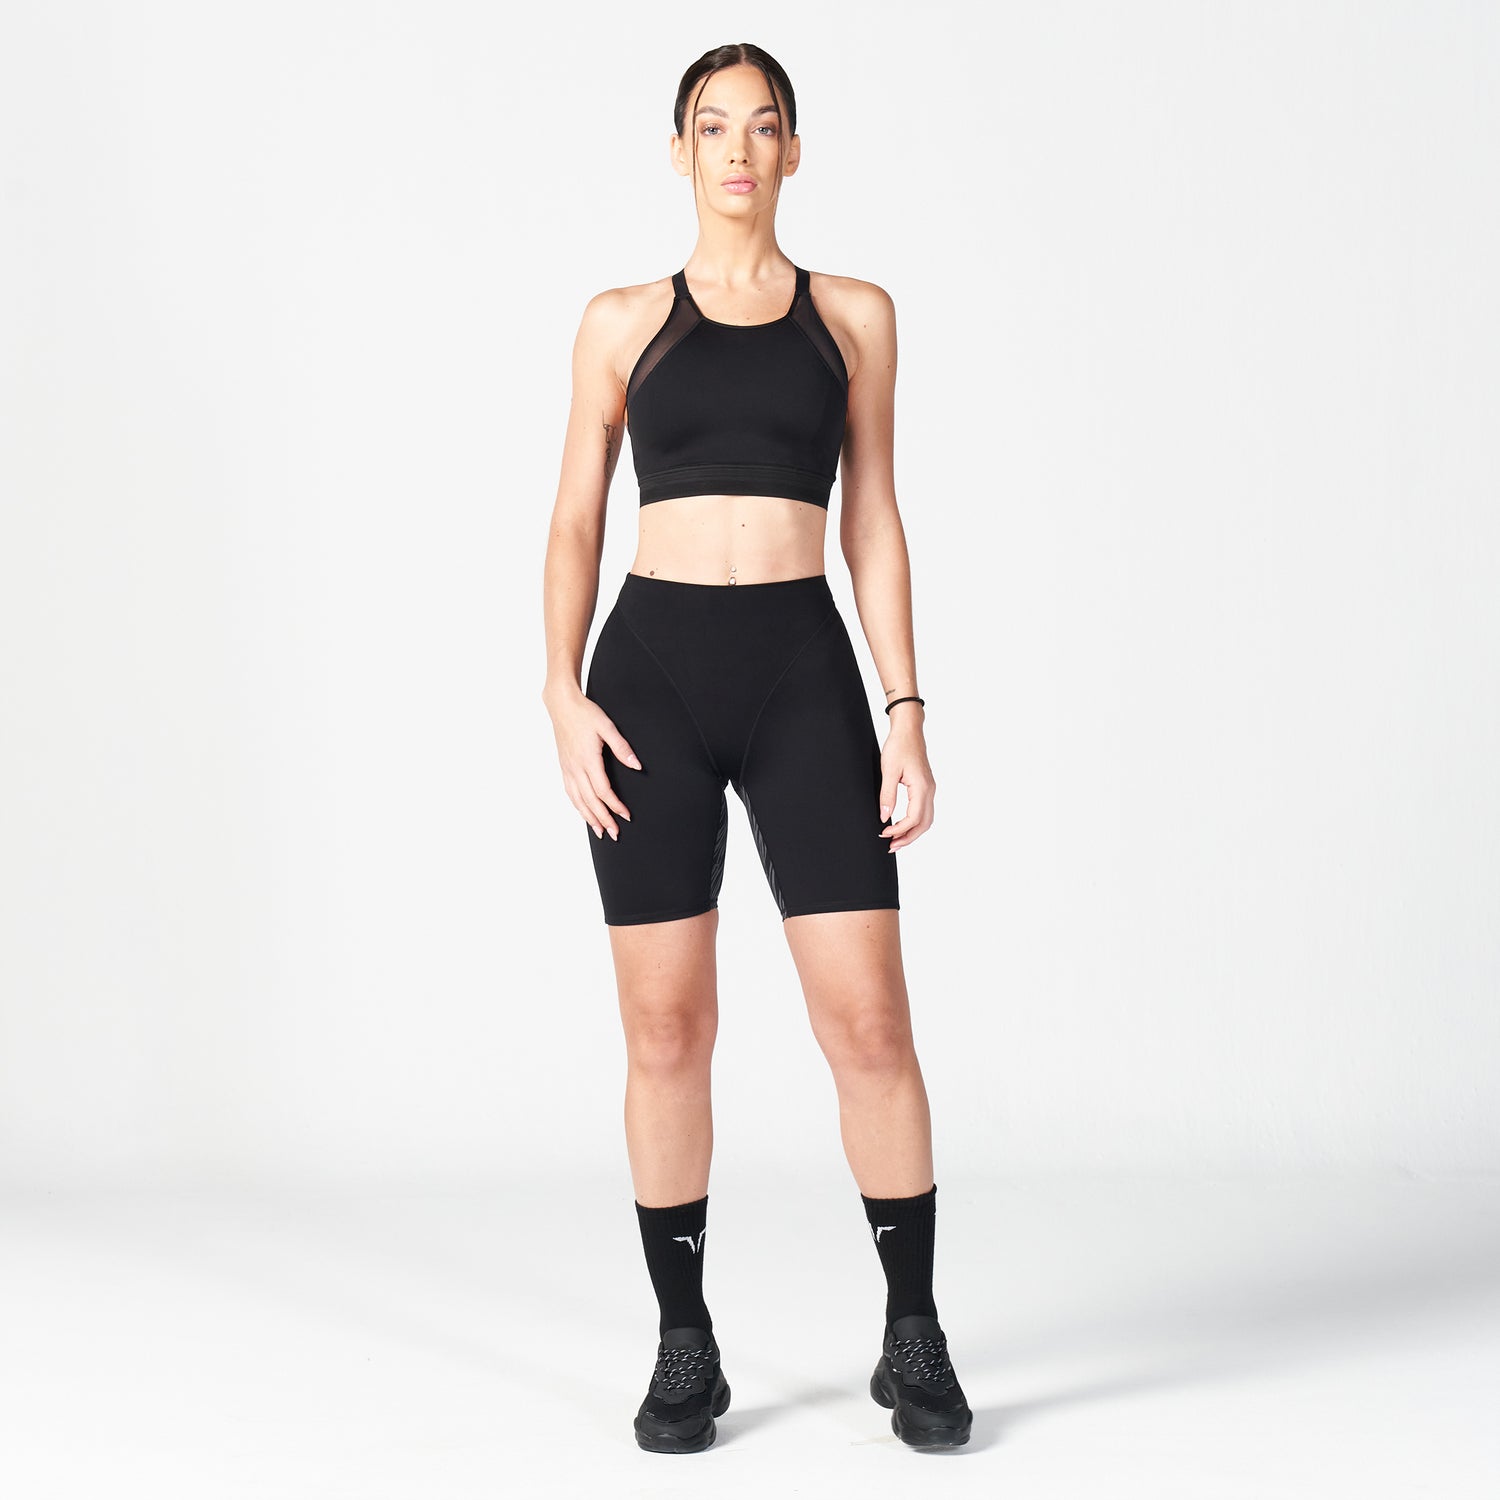 squatwolf-workout-clothes-core-v-biker-shorts-black-bike-shorts-women